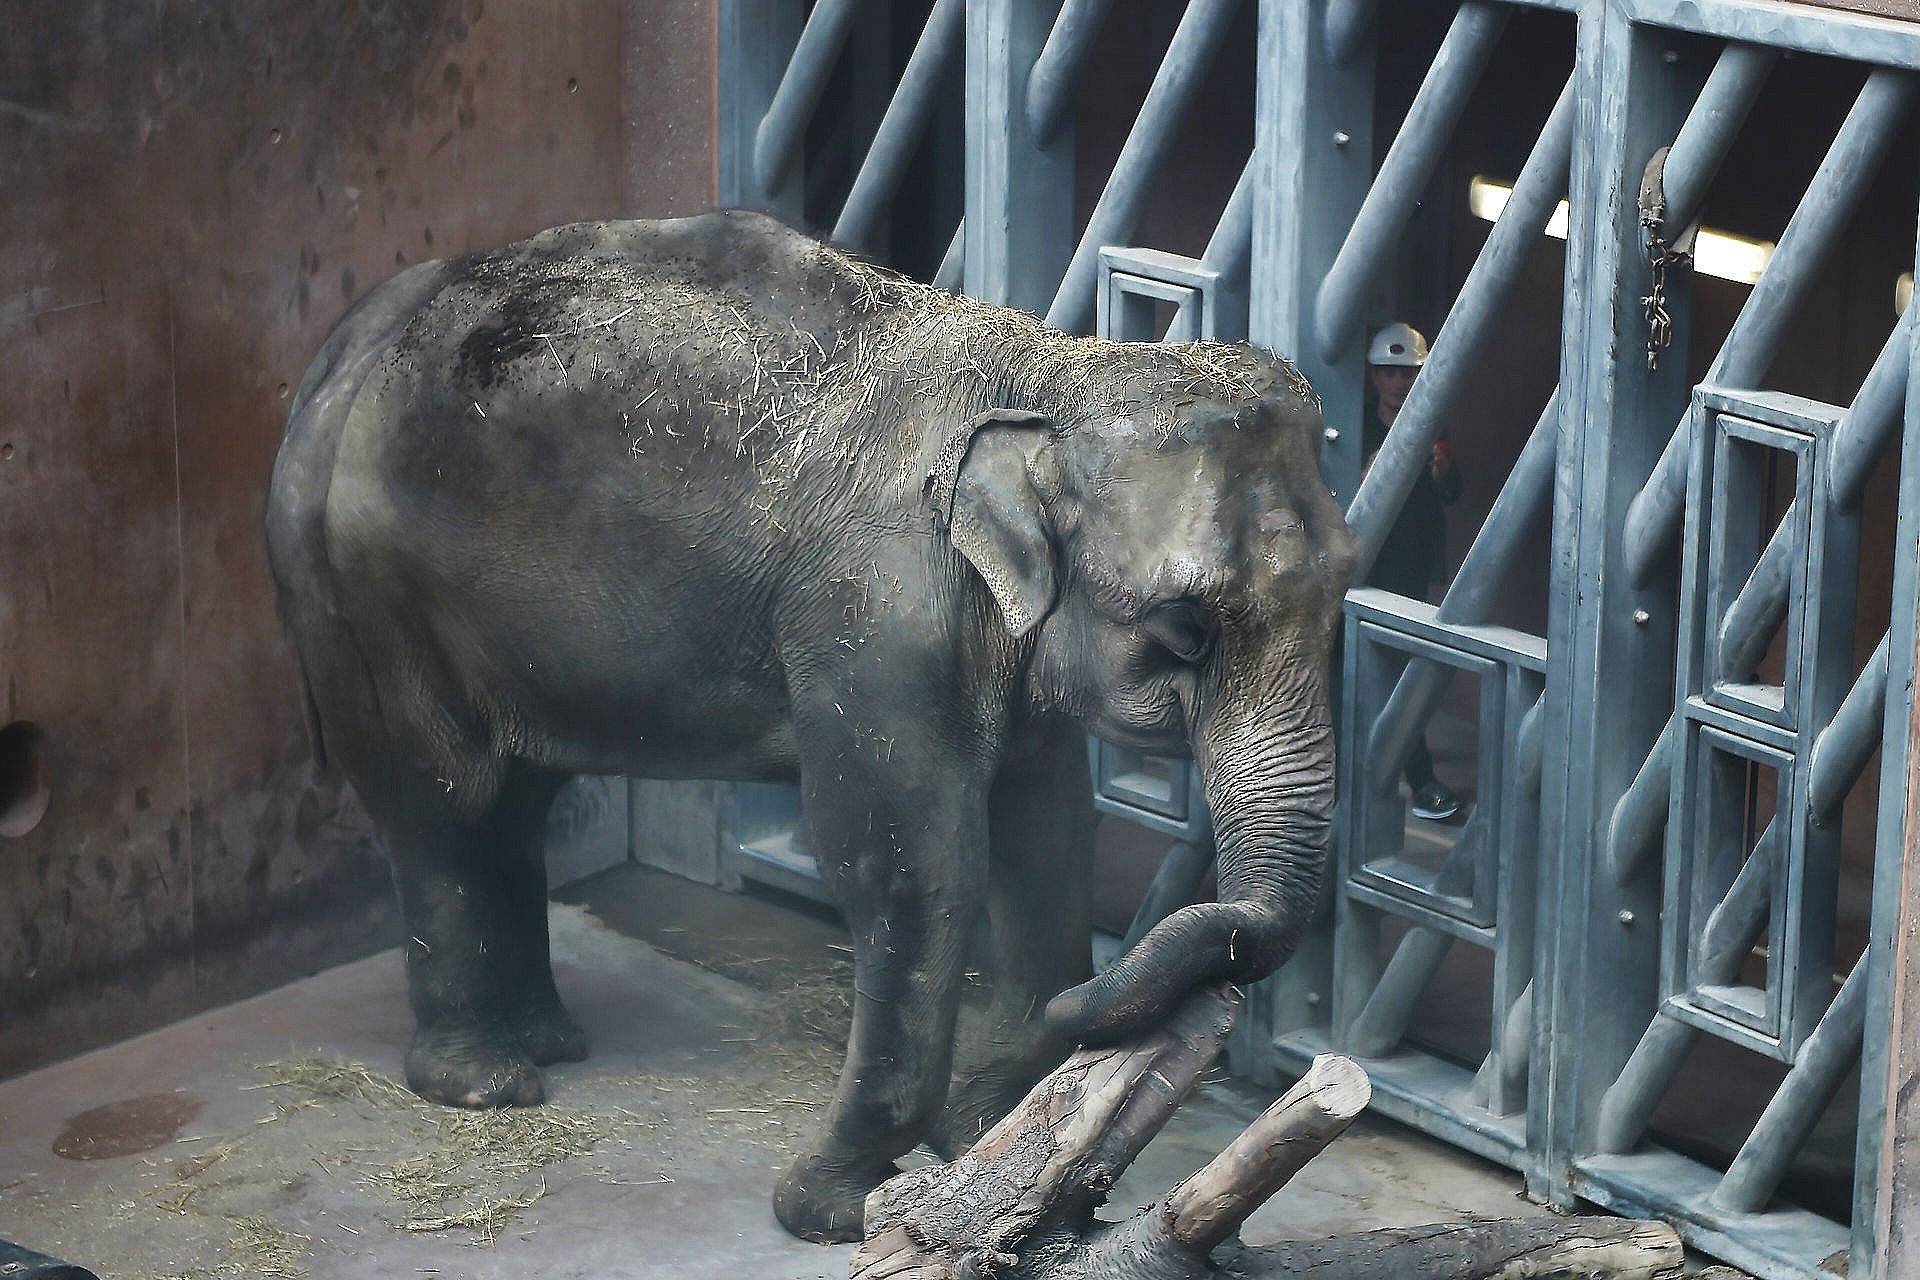 Stien Syd Arbejdsgiver Chok i Zoo: Elefant død i nat | TV 2 Lorry